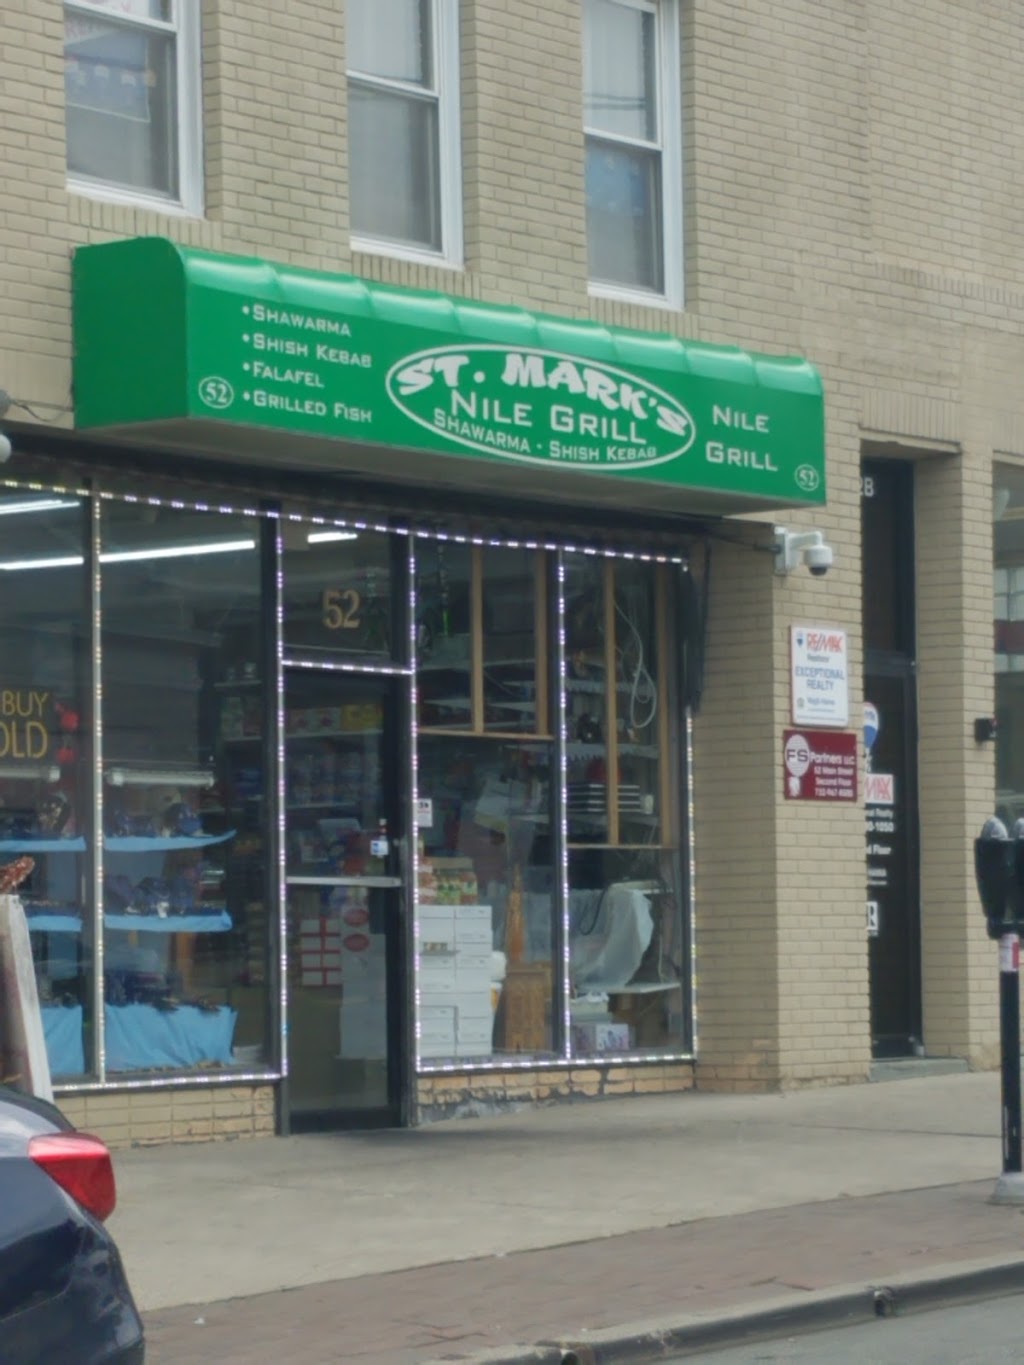 St Marks Deli & Convenience | 52 Main St, South River, NJ 08882 | Phone: (732) 651-0075